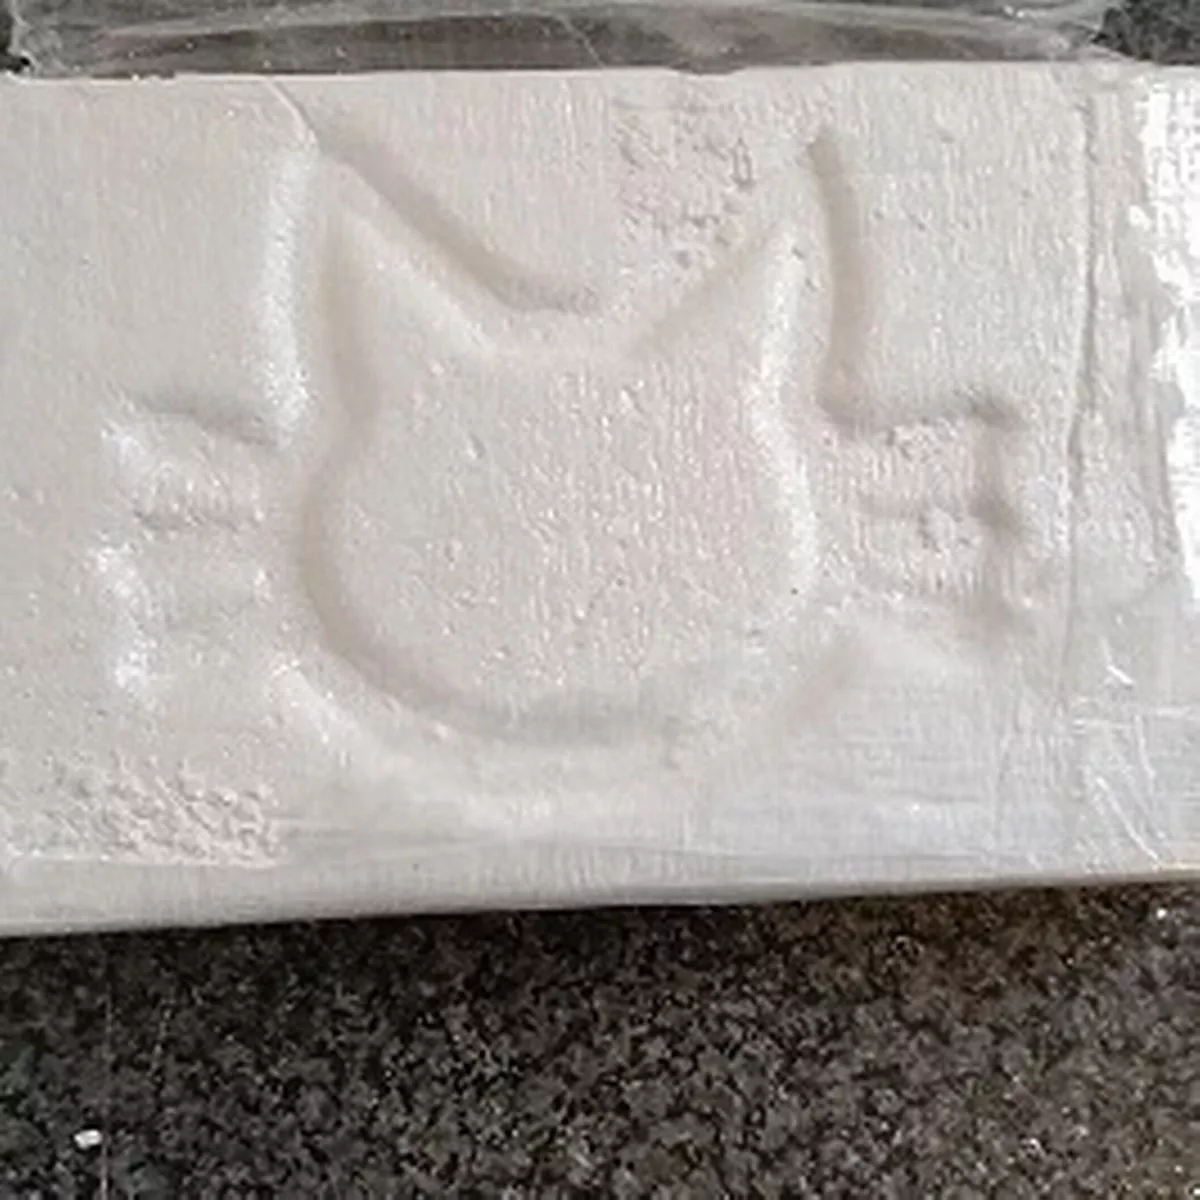 Buy Cocaine in Estonia Online